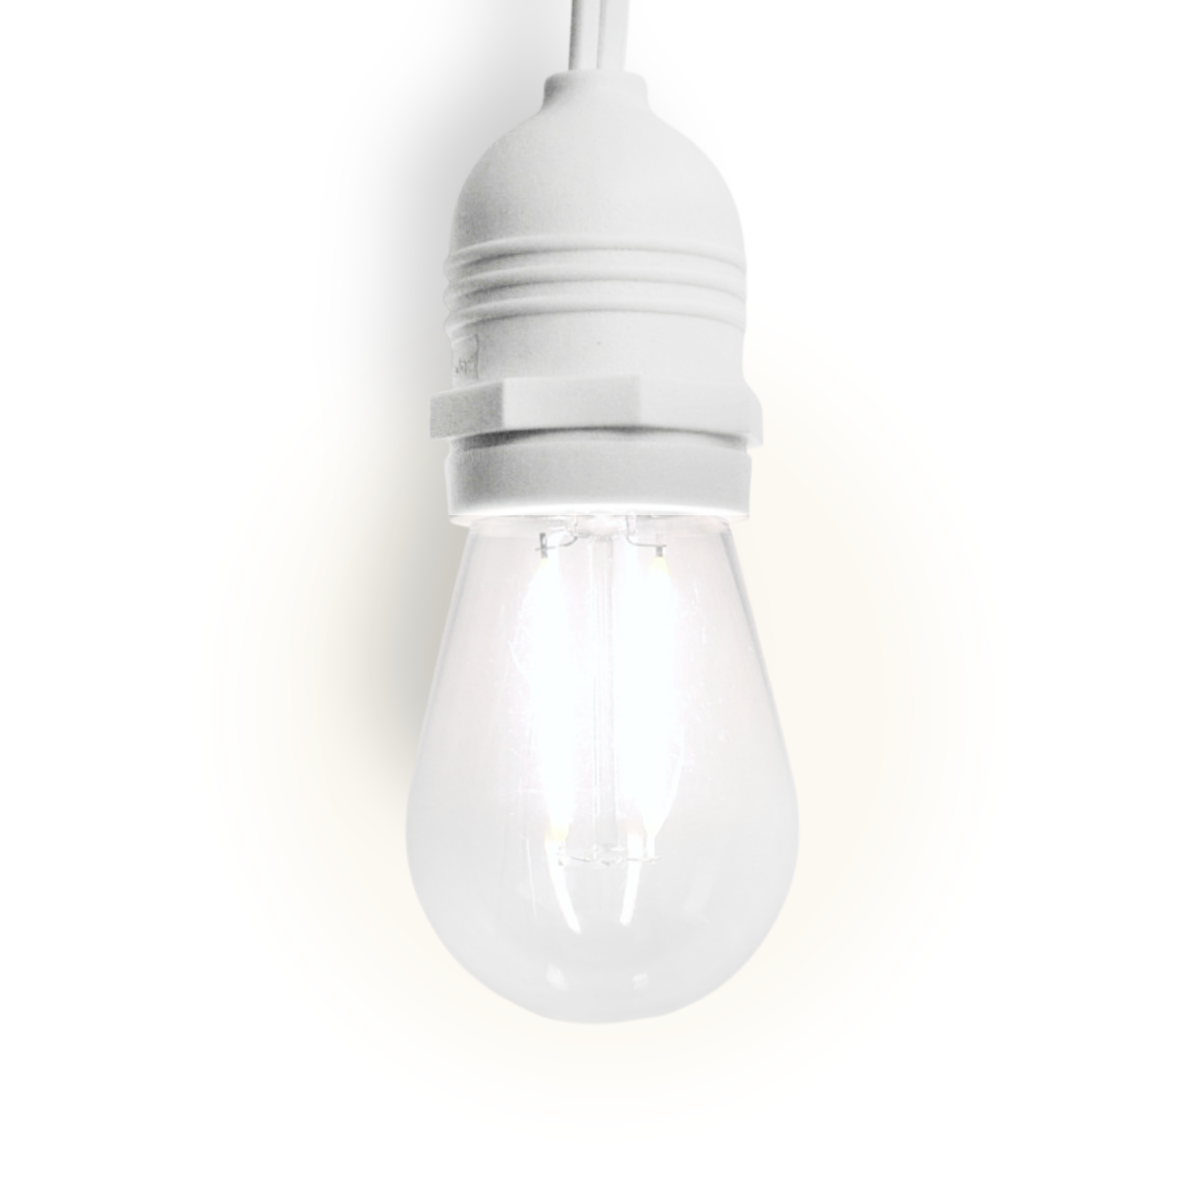 10-Pack Cool White LED Filament S14 Shatterproof Light Bulb, Dimmable, 2W,  E26 Medium Base